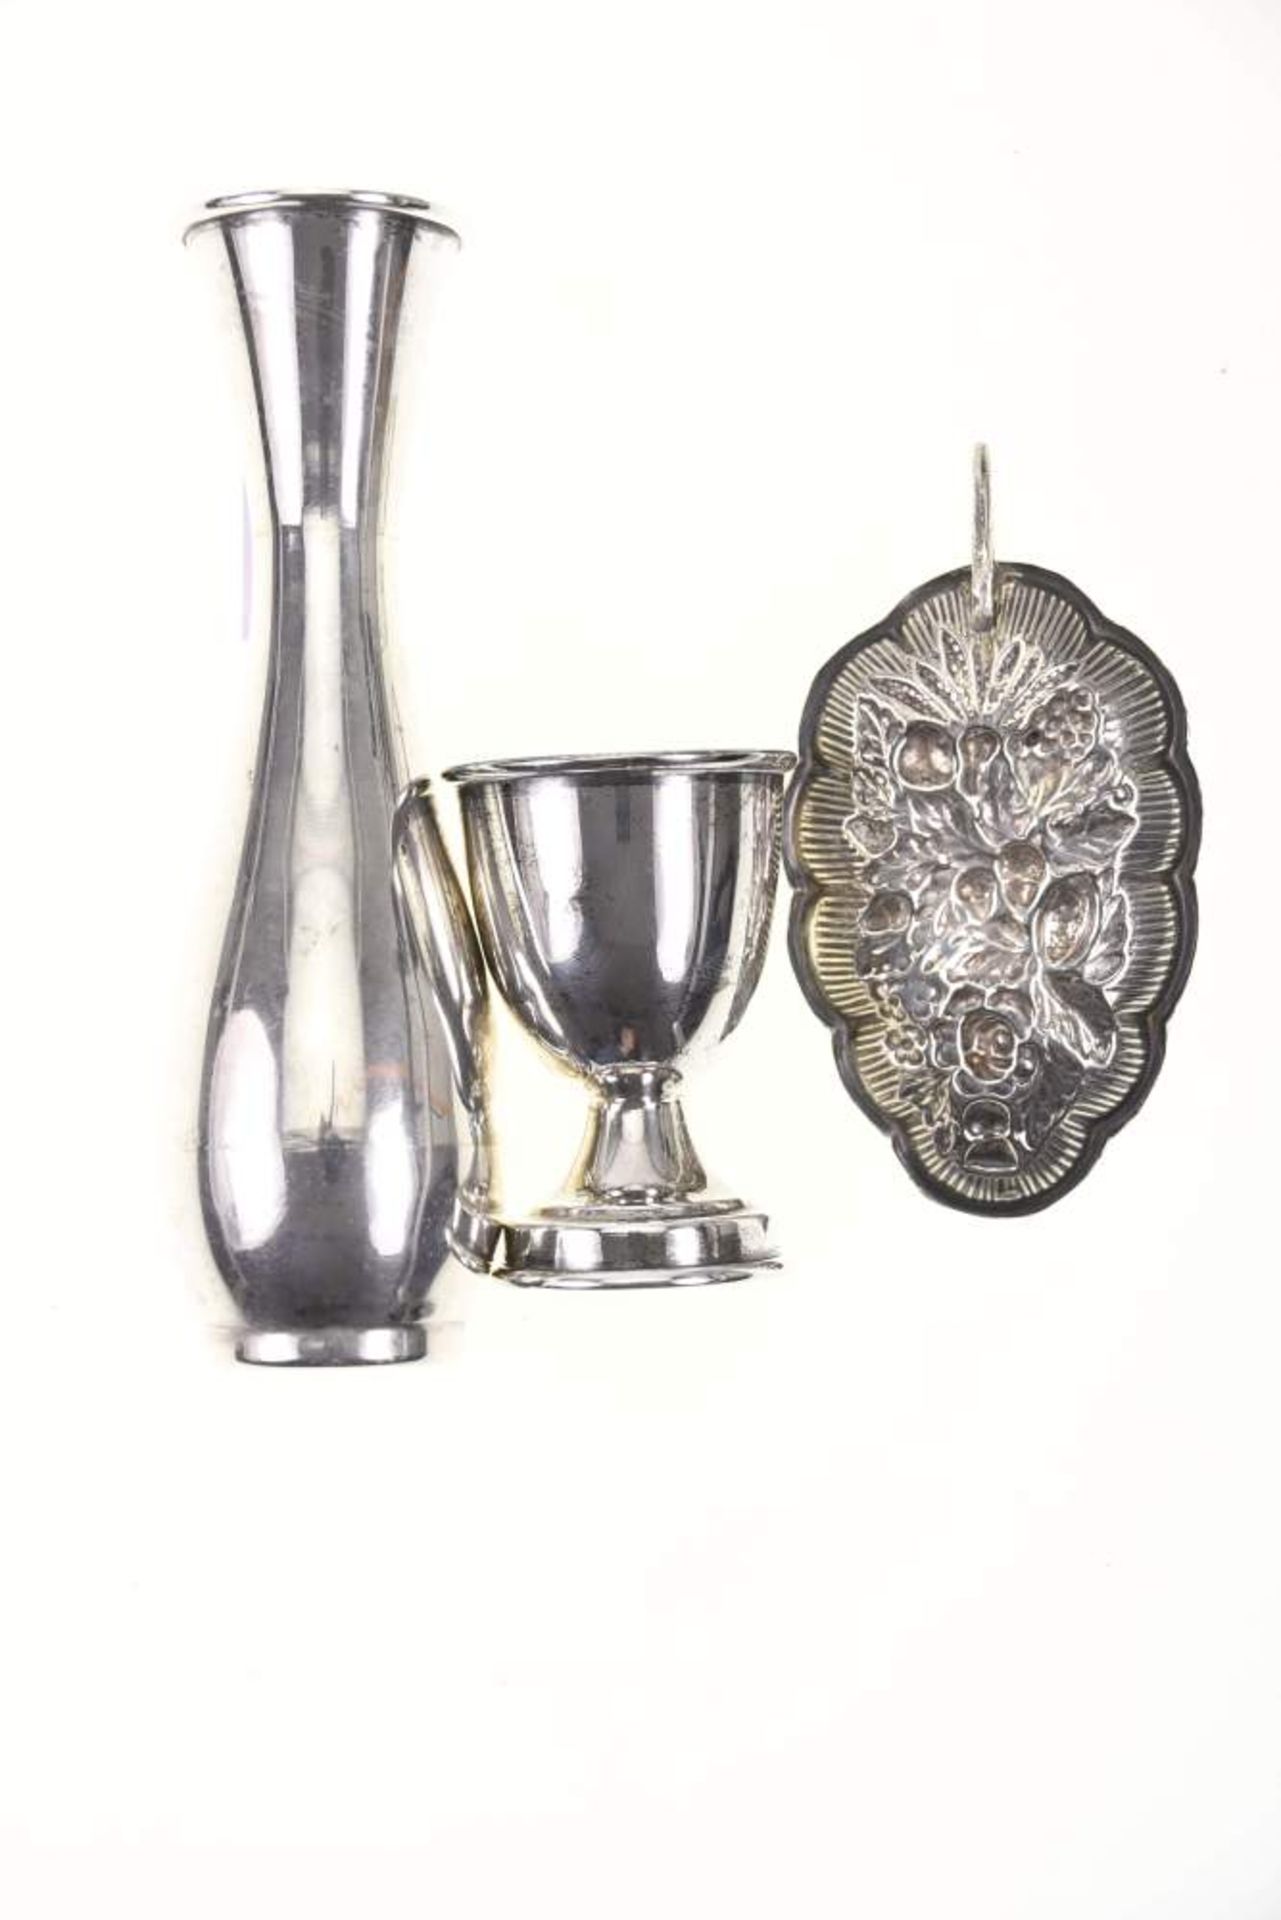 Silberset dreiteilig, 925 Silber, Griechenland 20 Jh., Vase 14,5x 4,5cmm, Eierbecher 6,5x 4,5cm, - Bild 5 aus 8